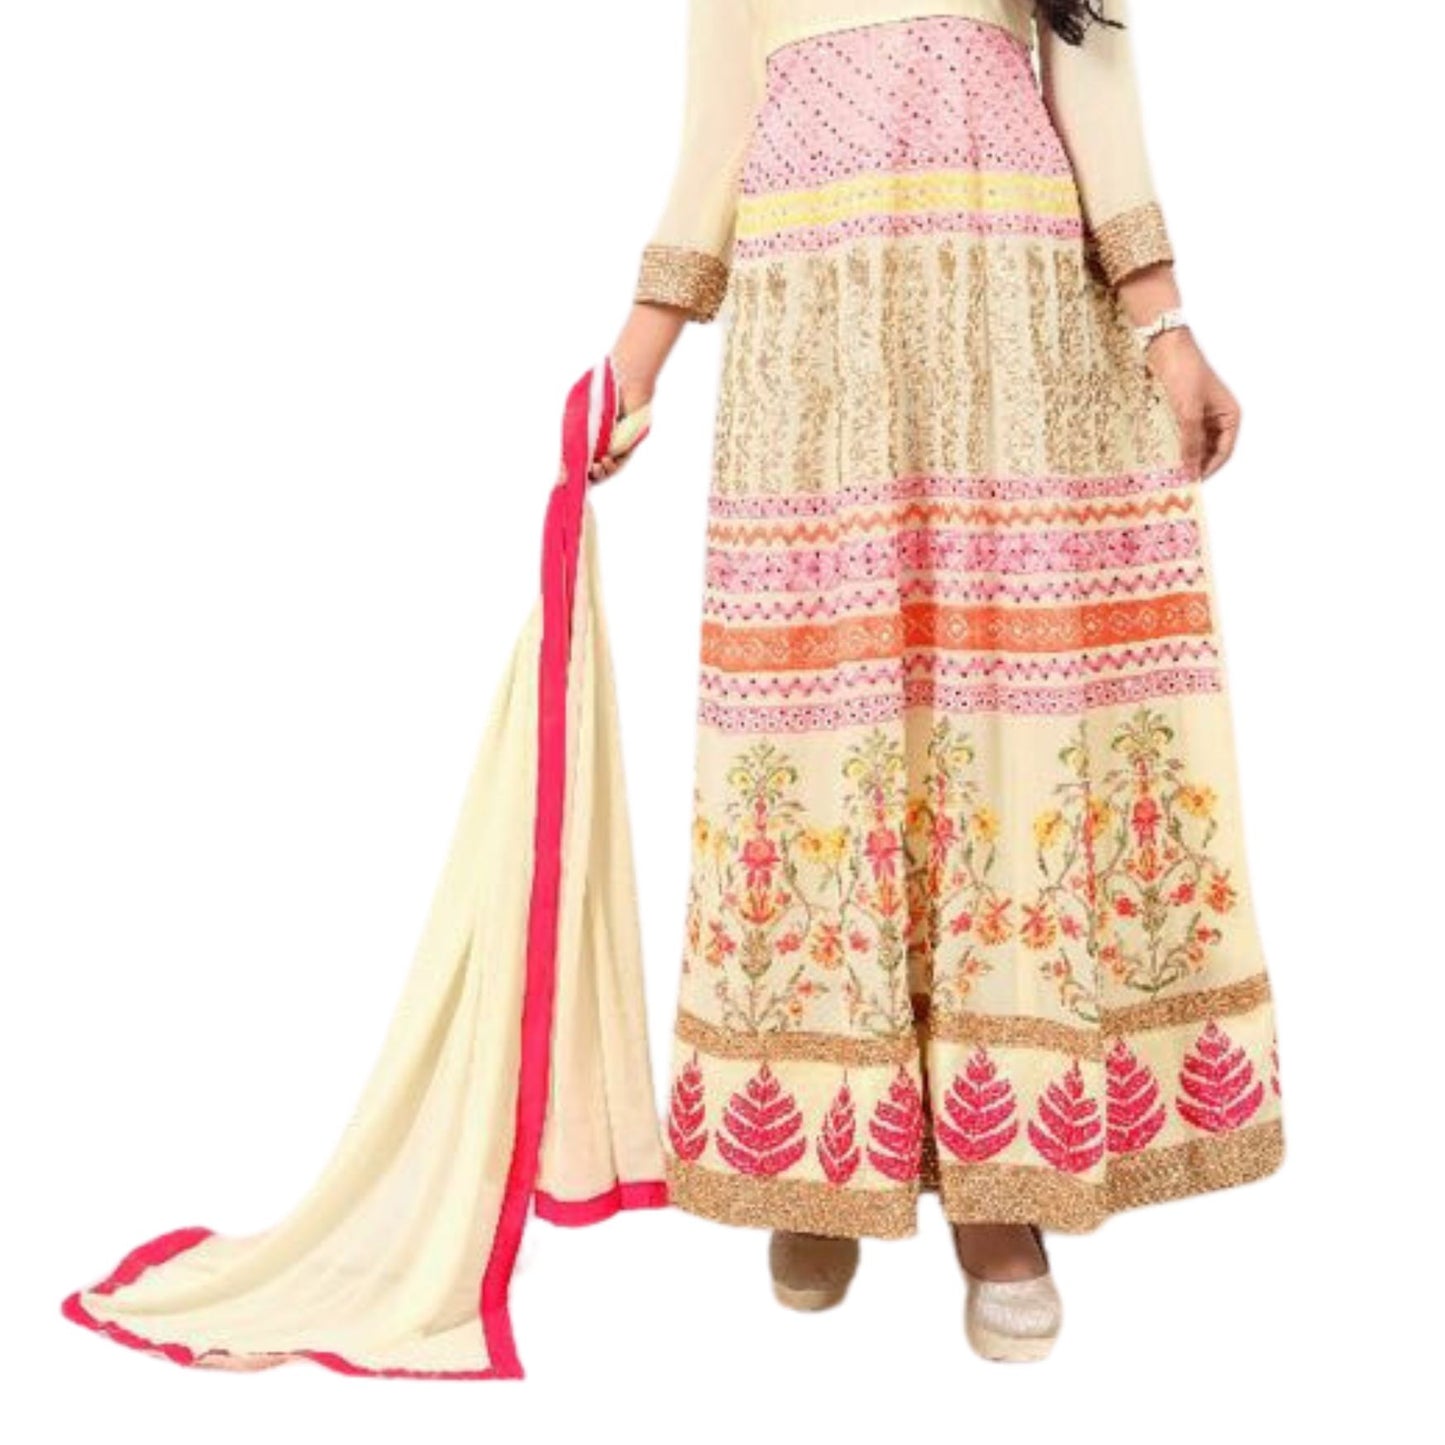 Designer Cream Color Anarkali Salwar Suit with Embroidery